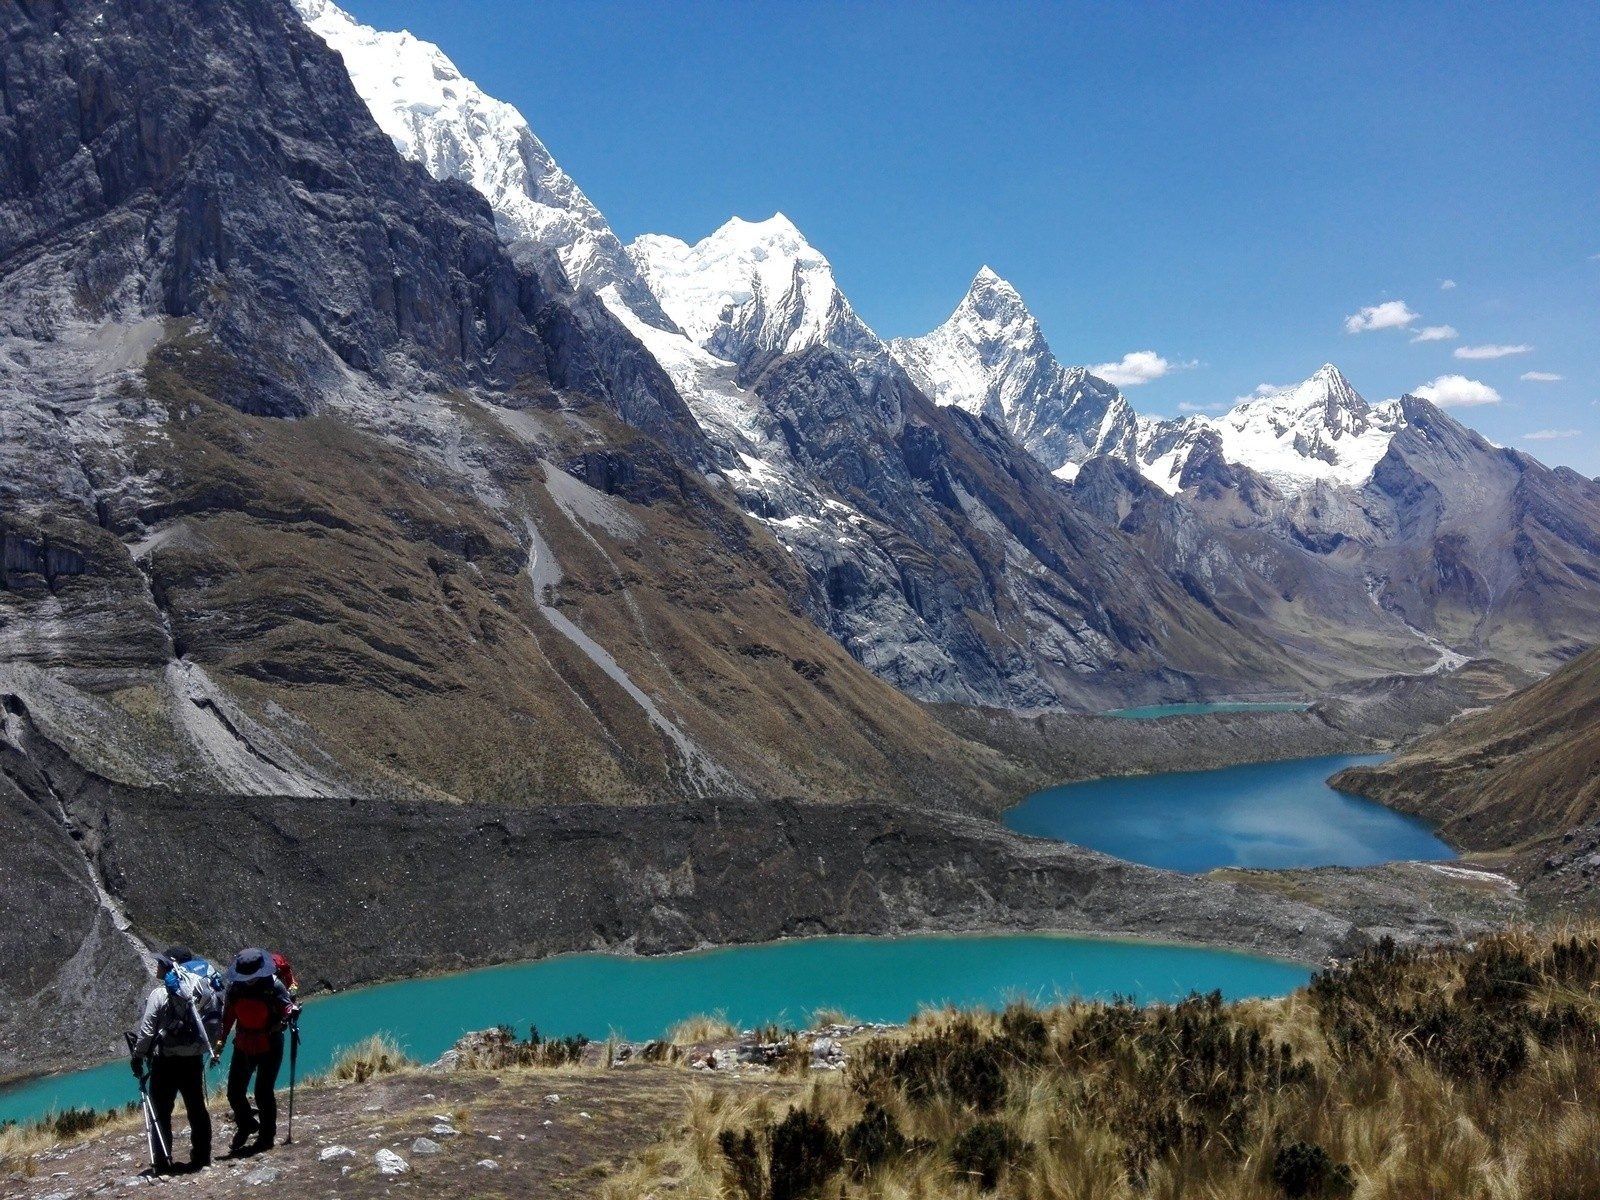 Trekkers on the Cordillera Huayhuash Circuit in Peru.